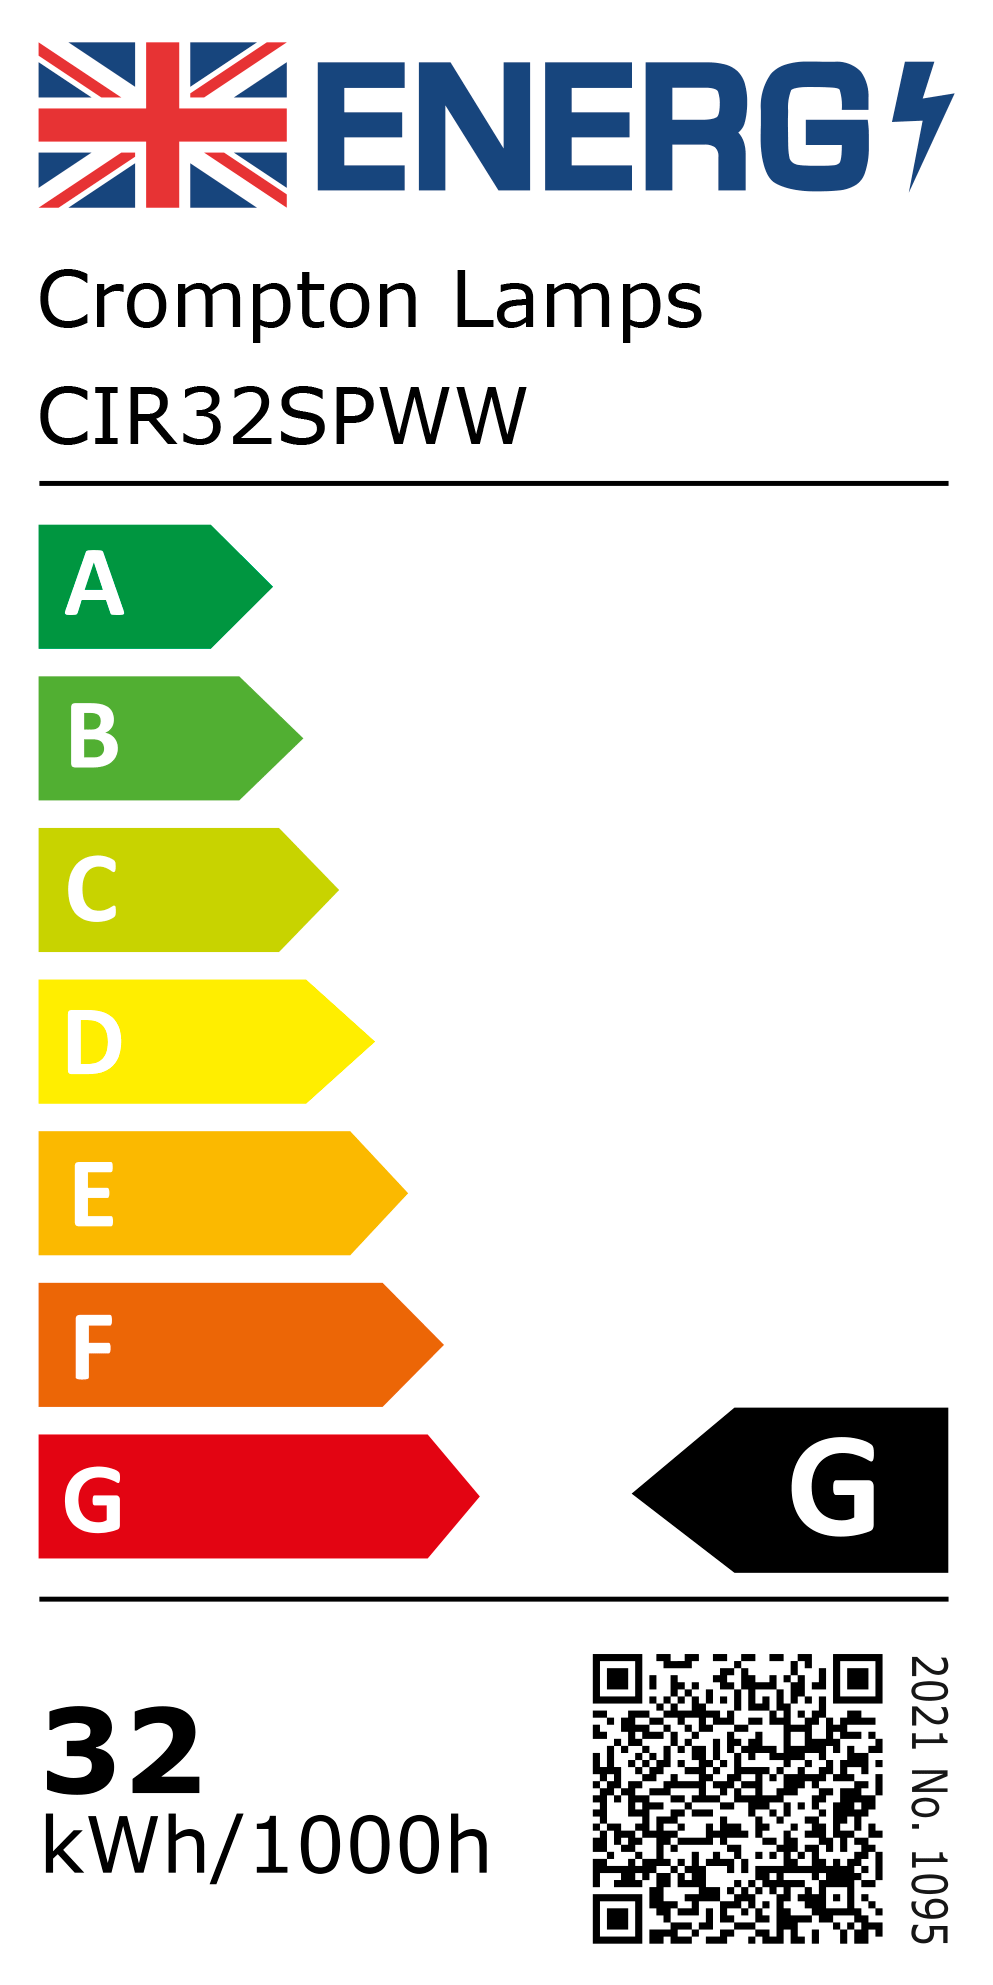 New 2021 Energy Rating Label: Stock Code CIR32SPWW